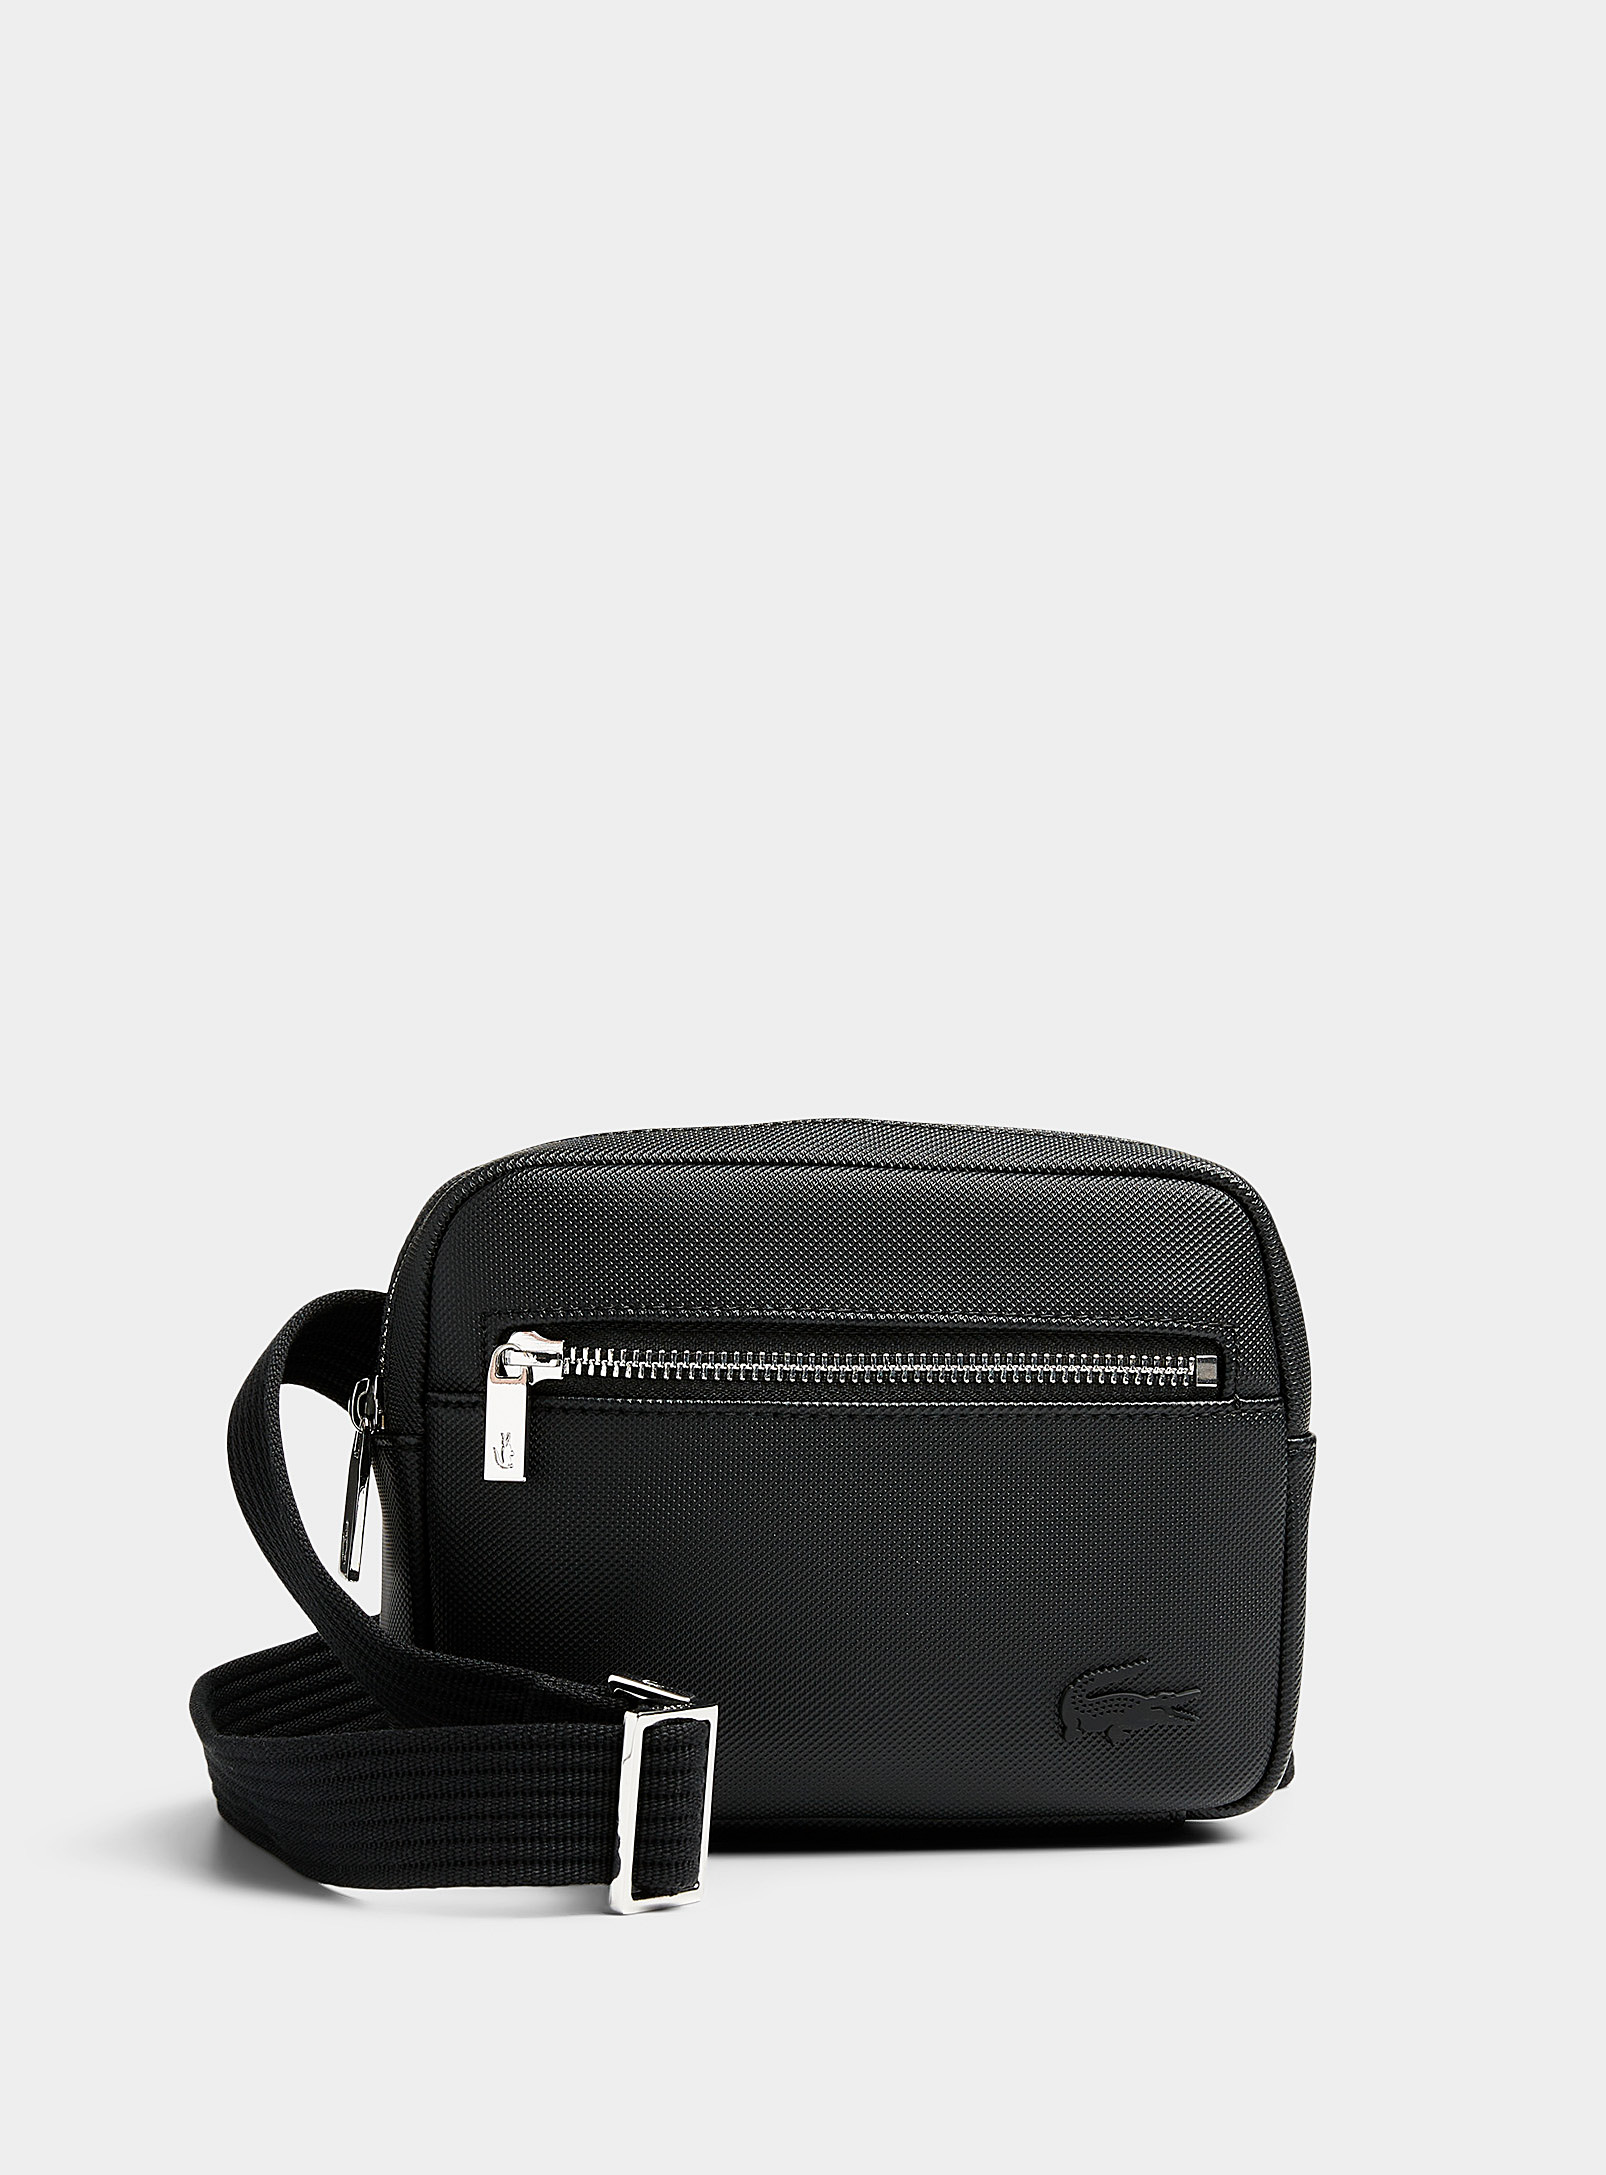 Lacoste Small Monochrome Rectangular Bag In Black